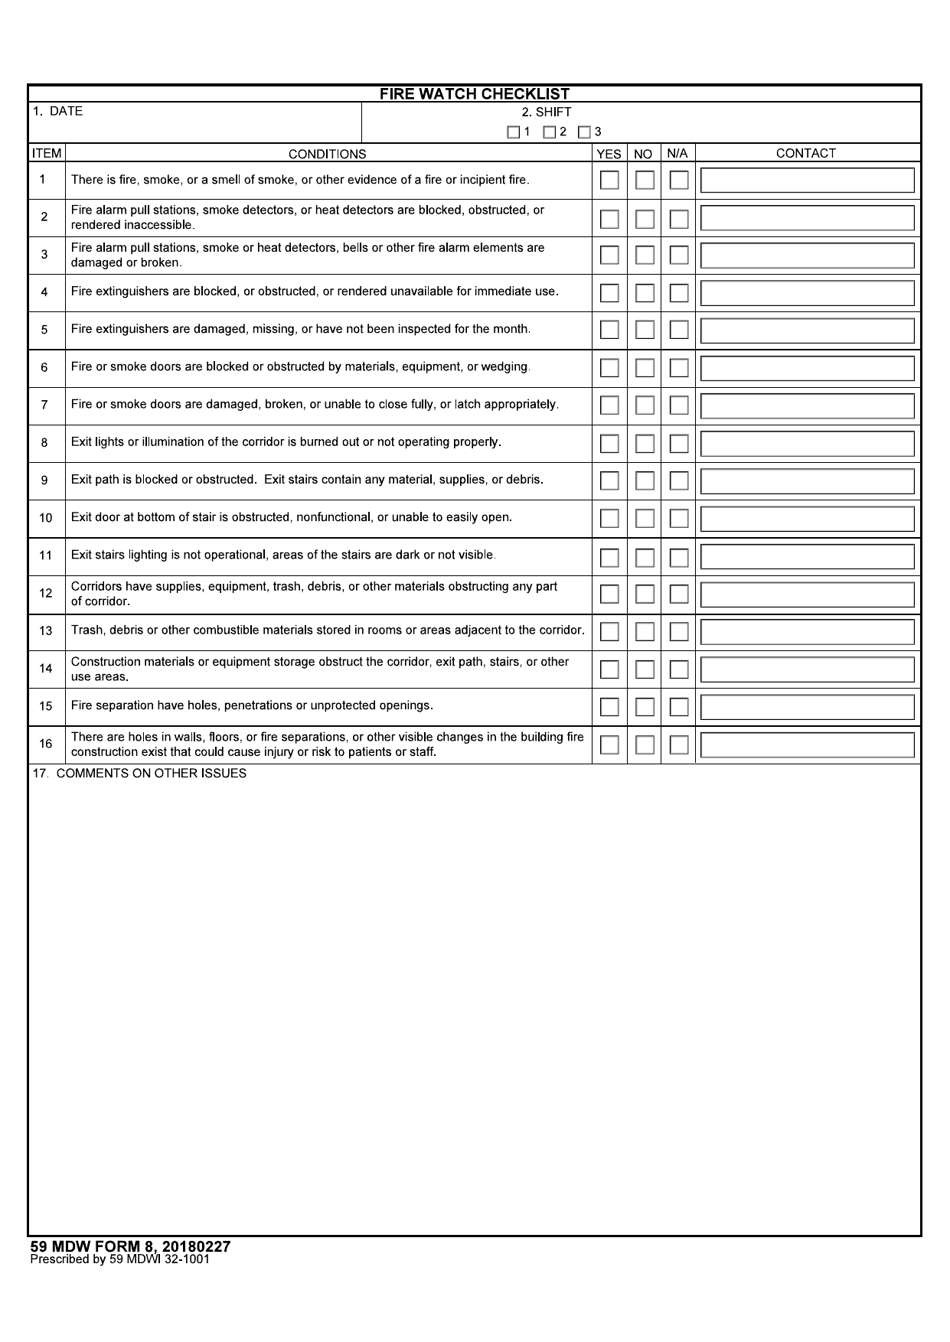 59 MDW Form 8 Fire Watch Checklist, Page 1